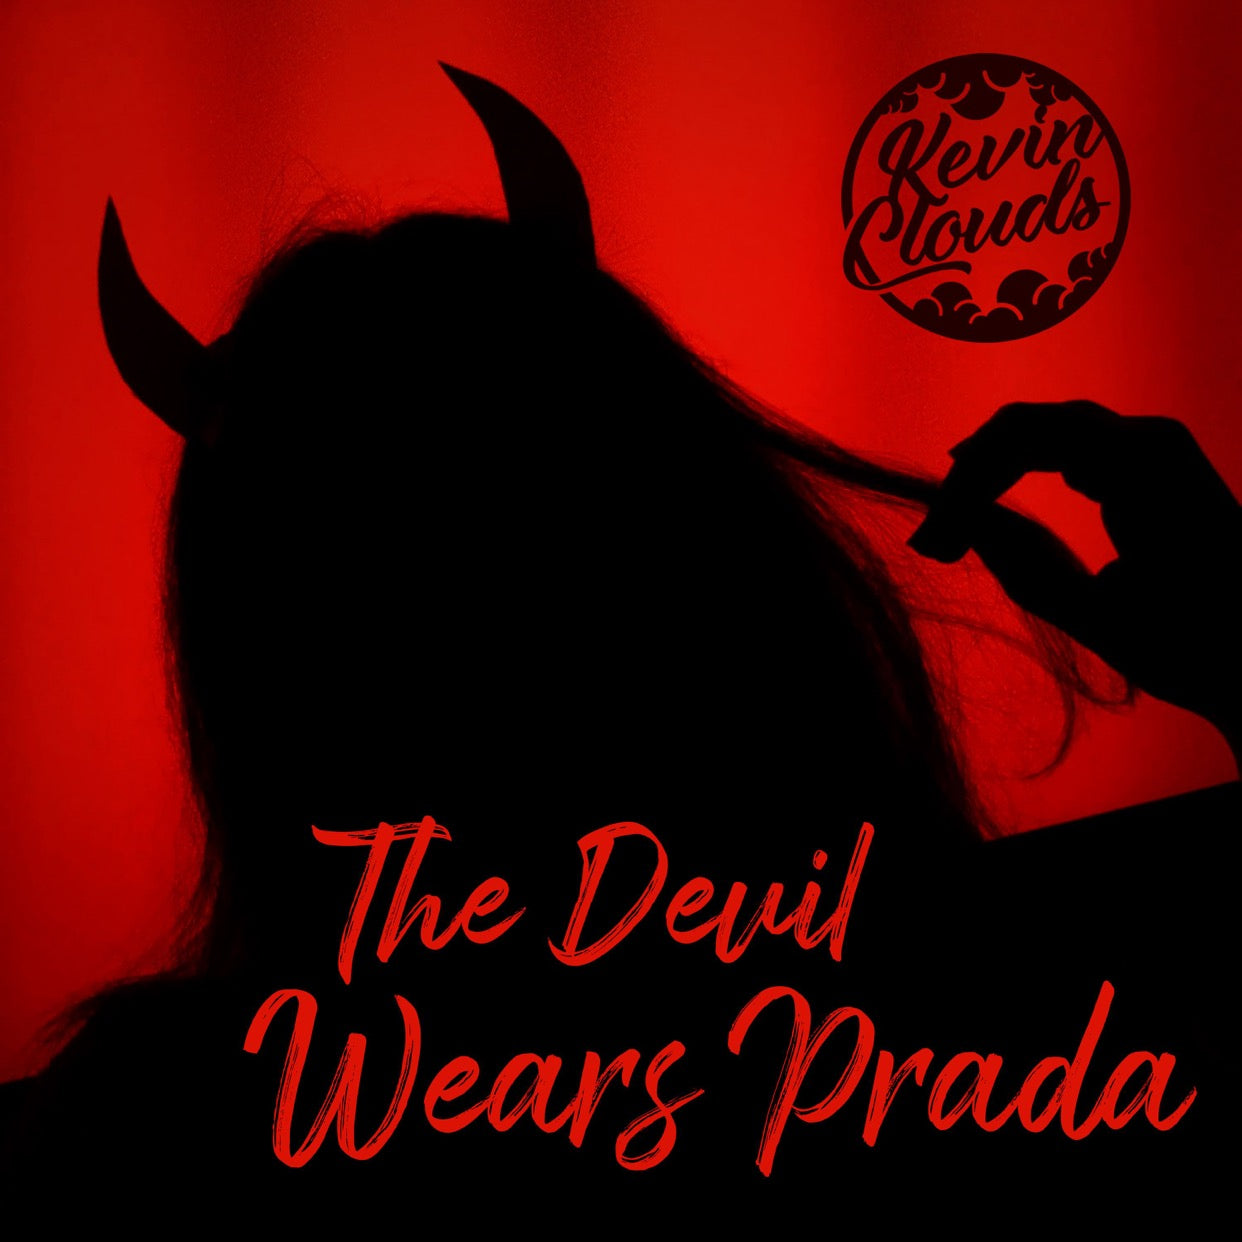 Kevin Clouds – ‘The Devil Wears Prada’